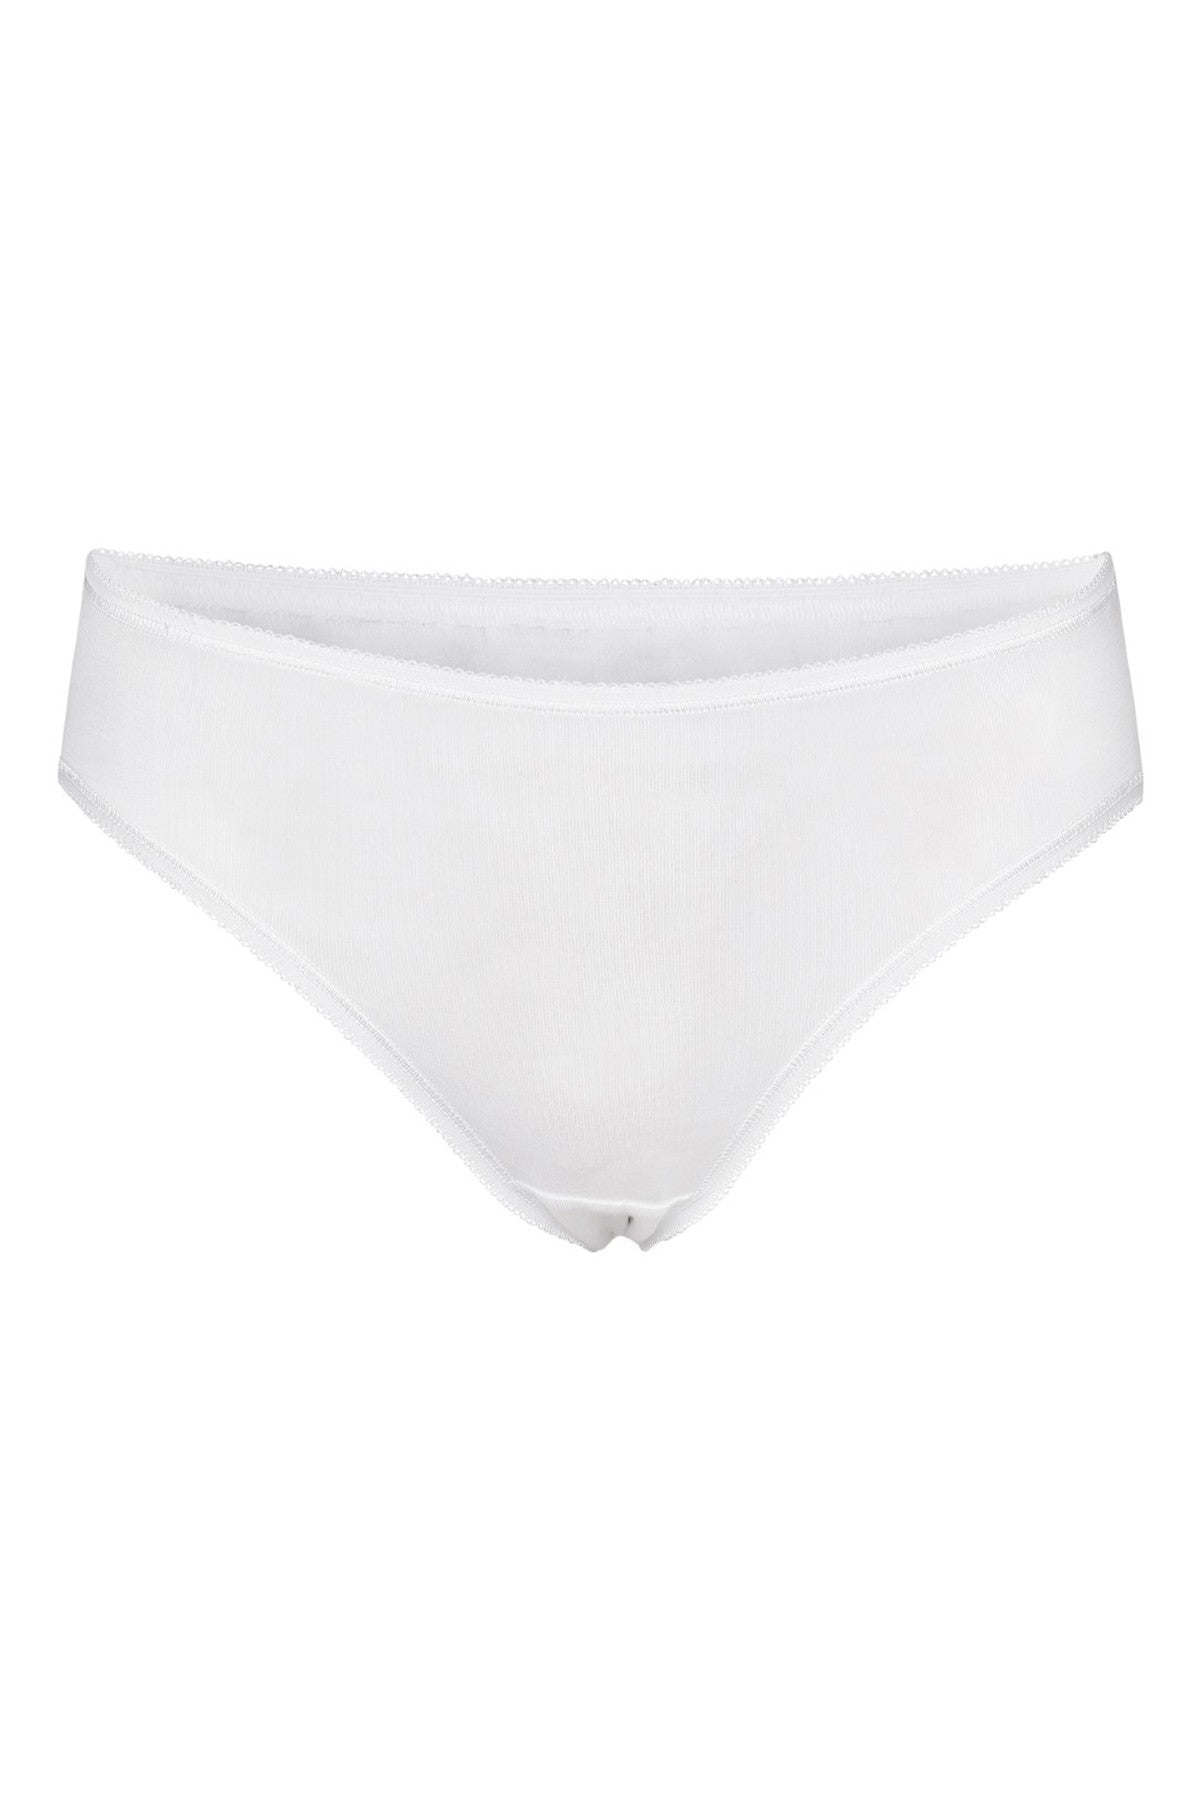 Mini Rise Panties - White